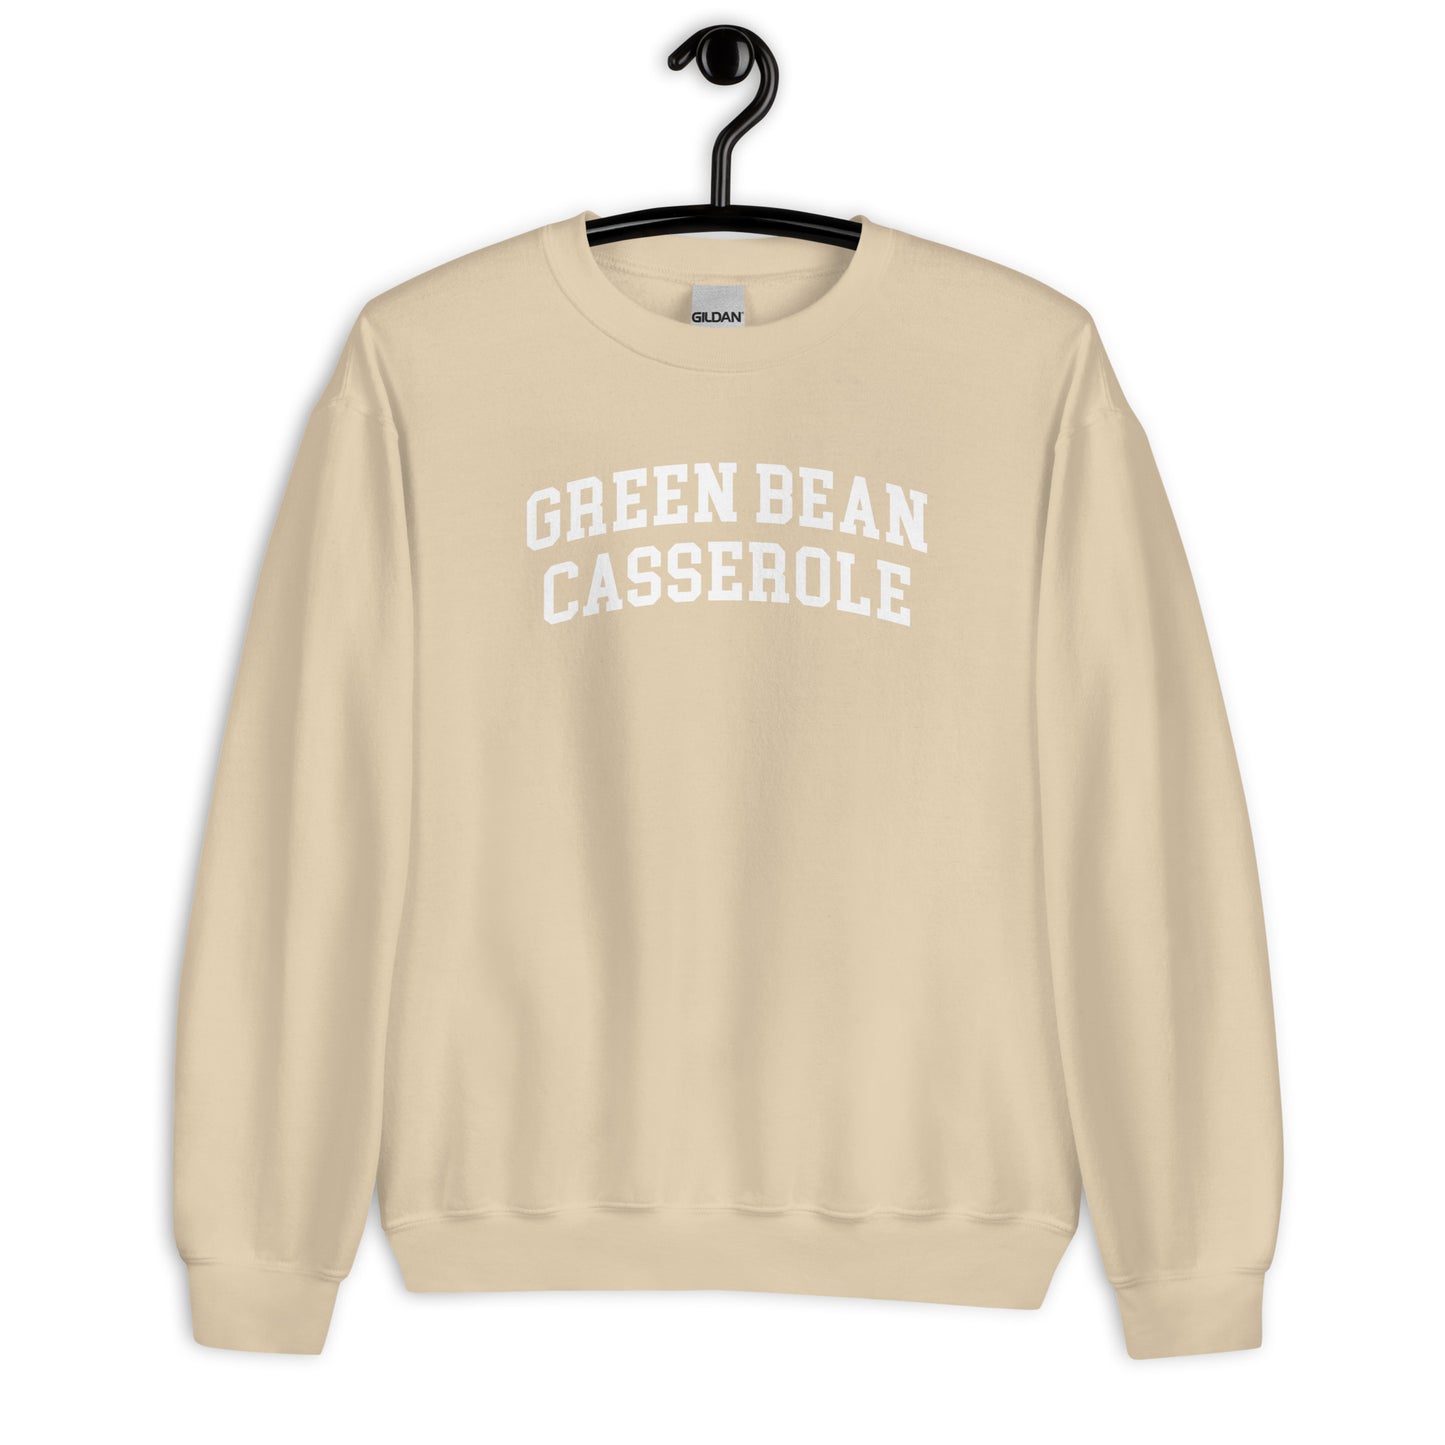 Green Bean Casserole Sweatshirt - Arched Font